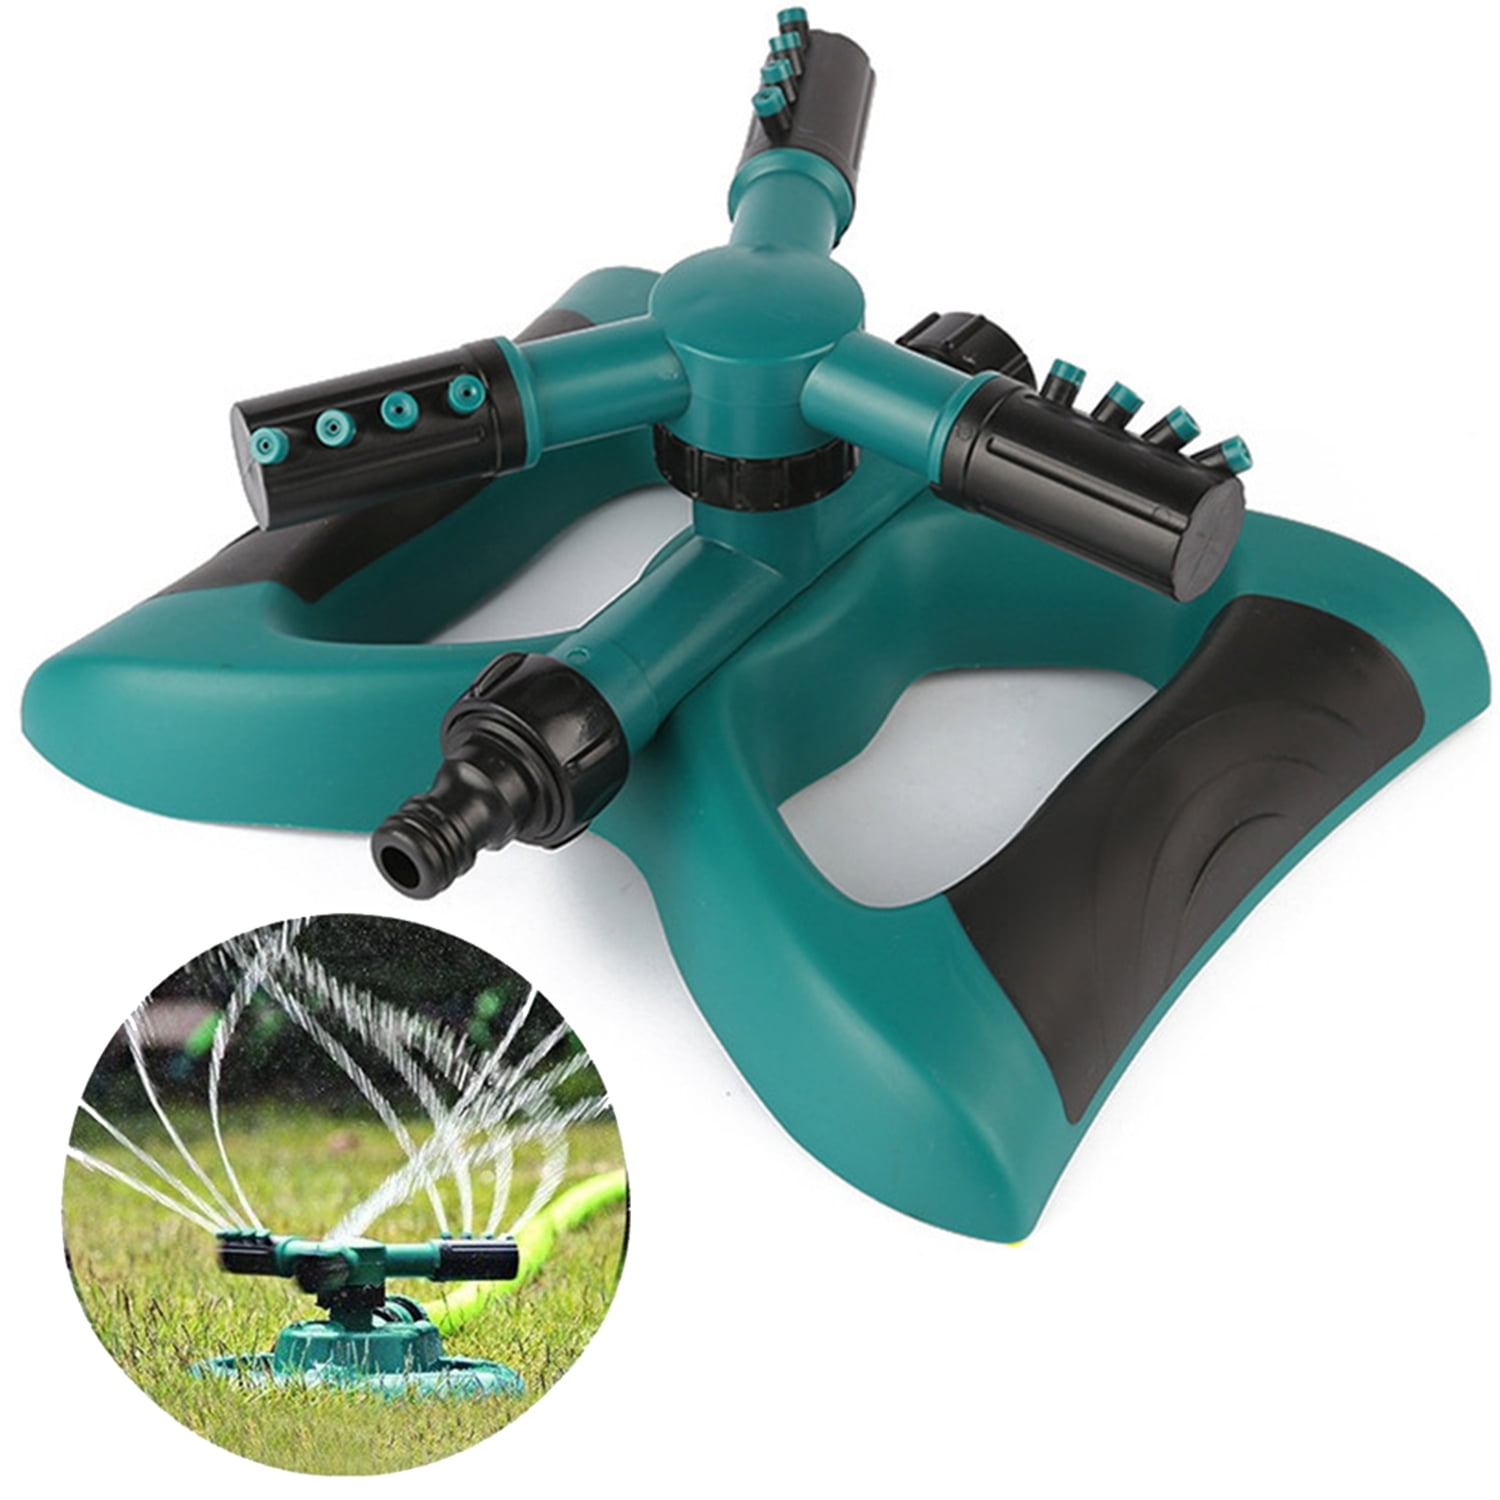 Garden Sprinkler Kids Water Toys for Kids Outdoor Whale Design Water Sprinkler 